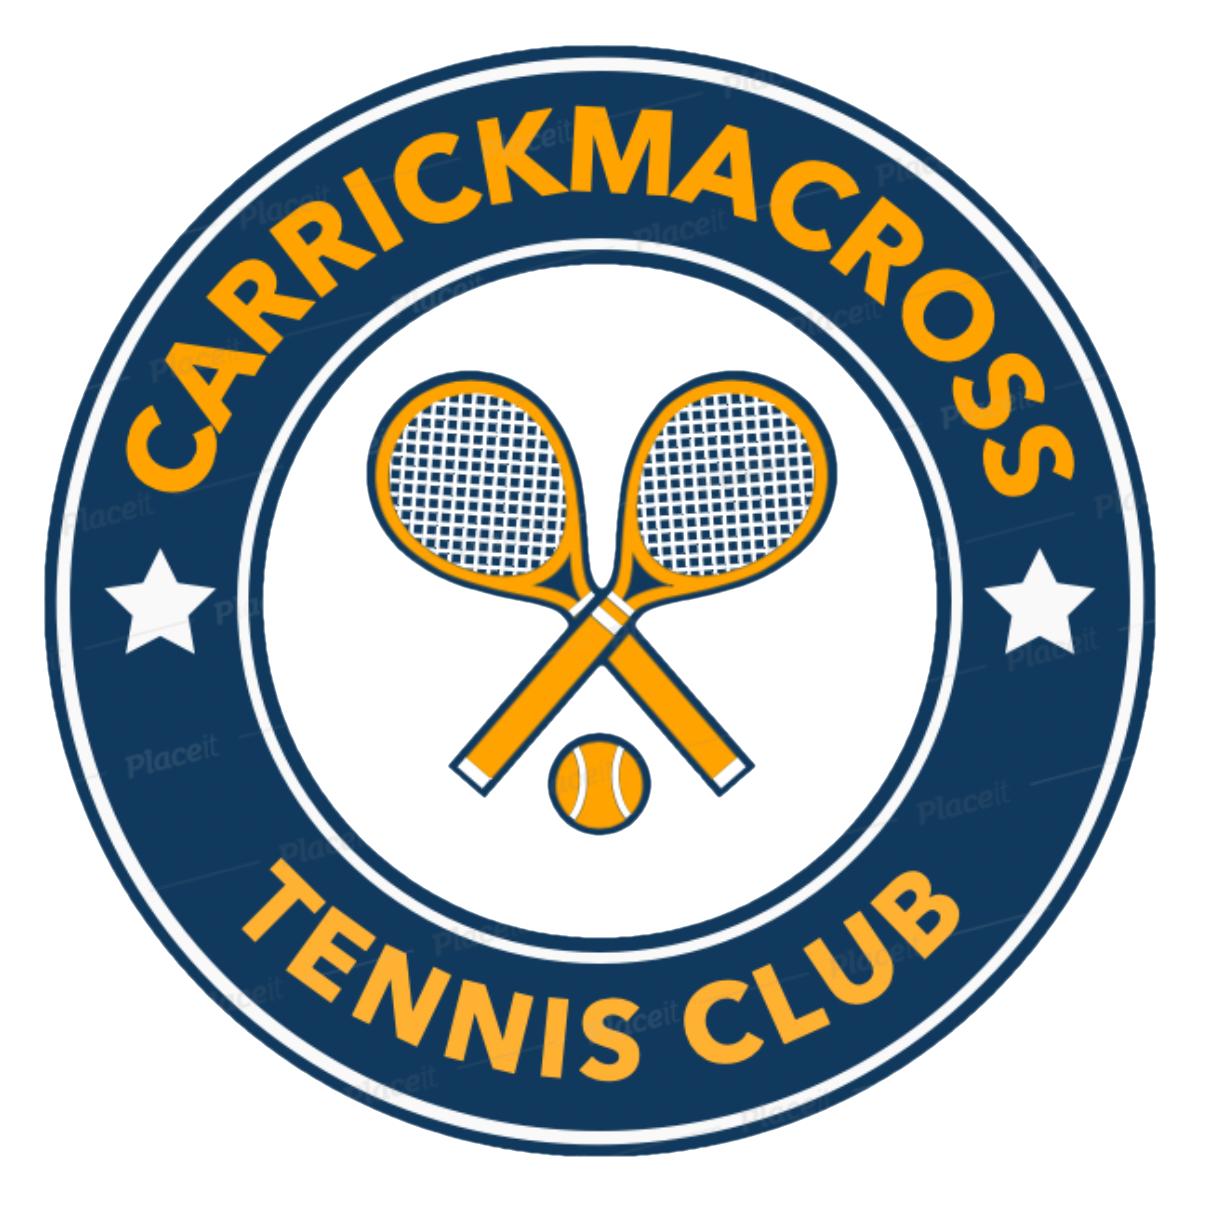 Carrickmacross Tennis Club